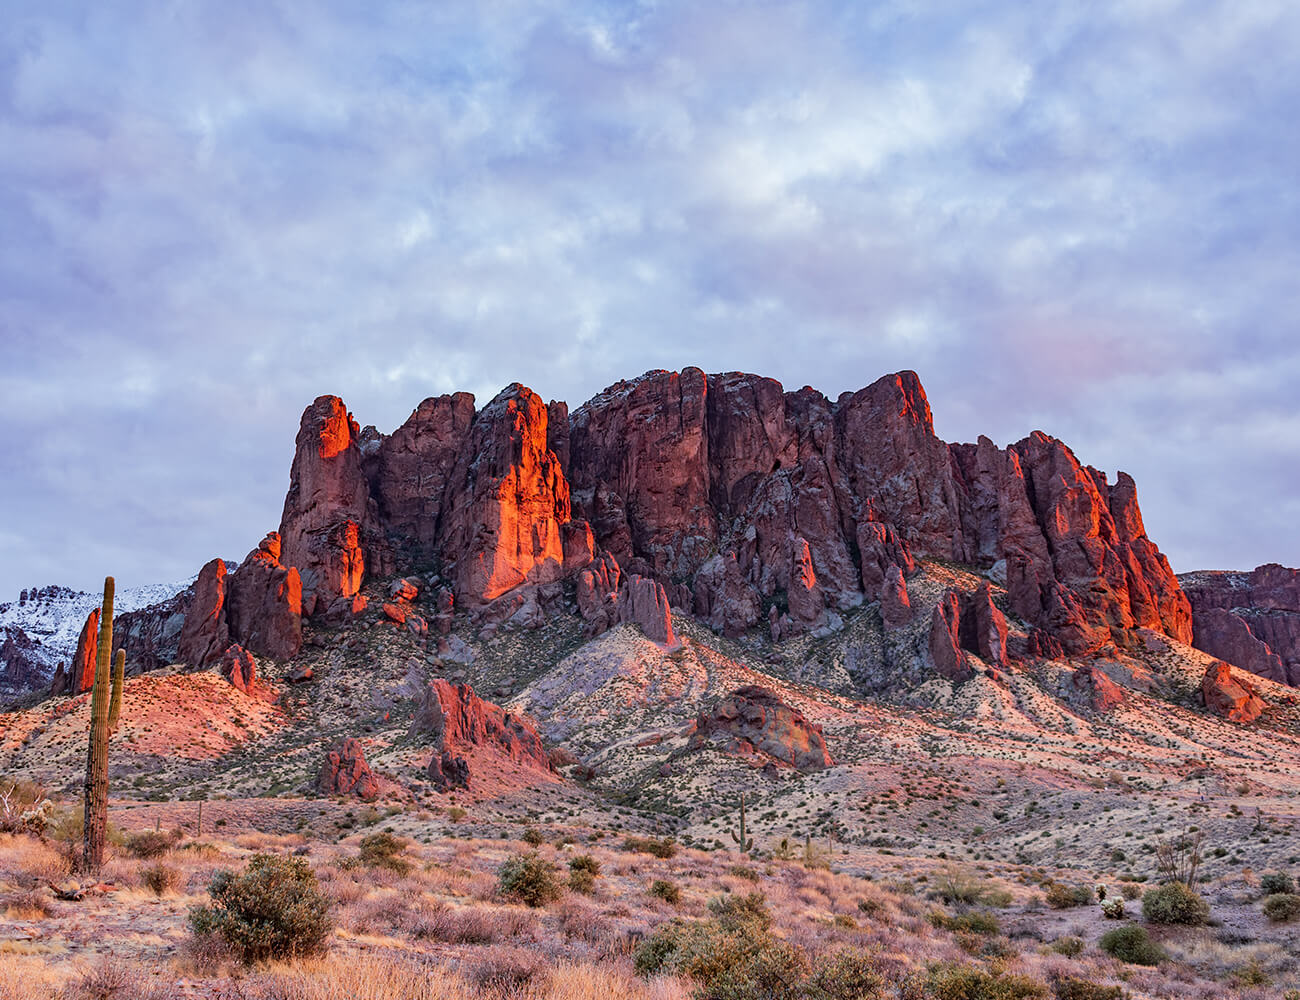 Desert Stone Mountain Scenery Background For Photography IBD-24589